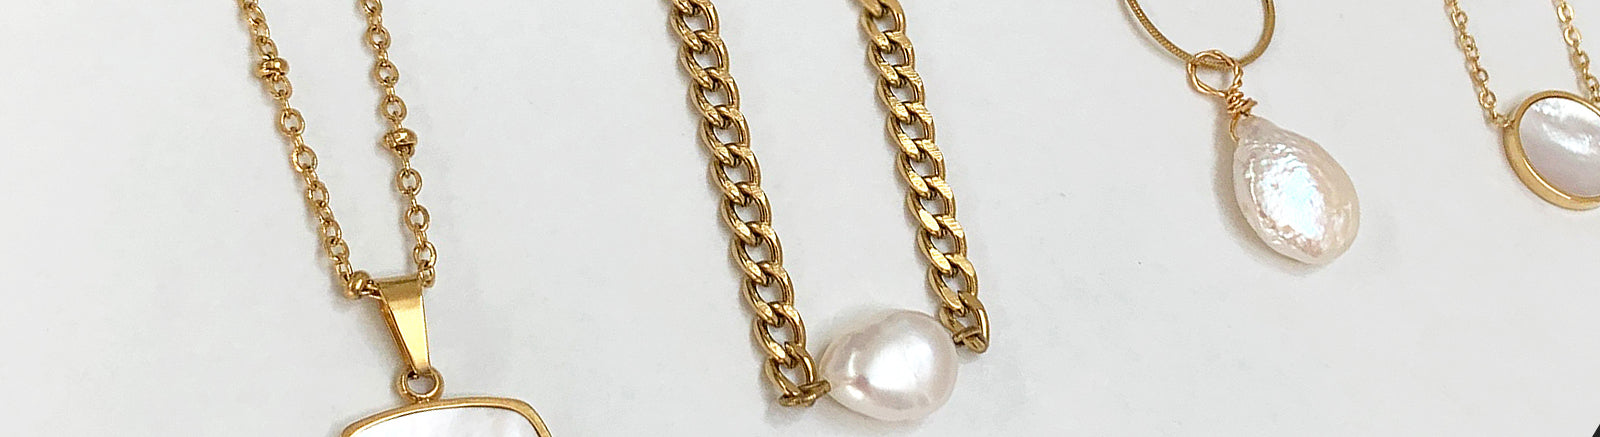 pendant necklaces waterproof jewelry